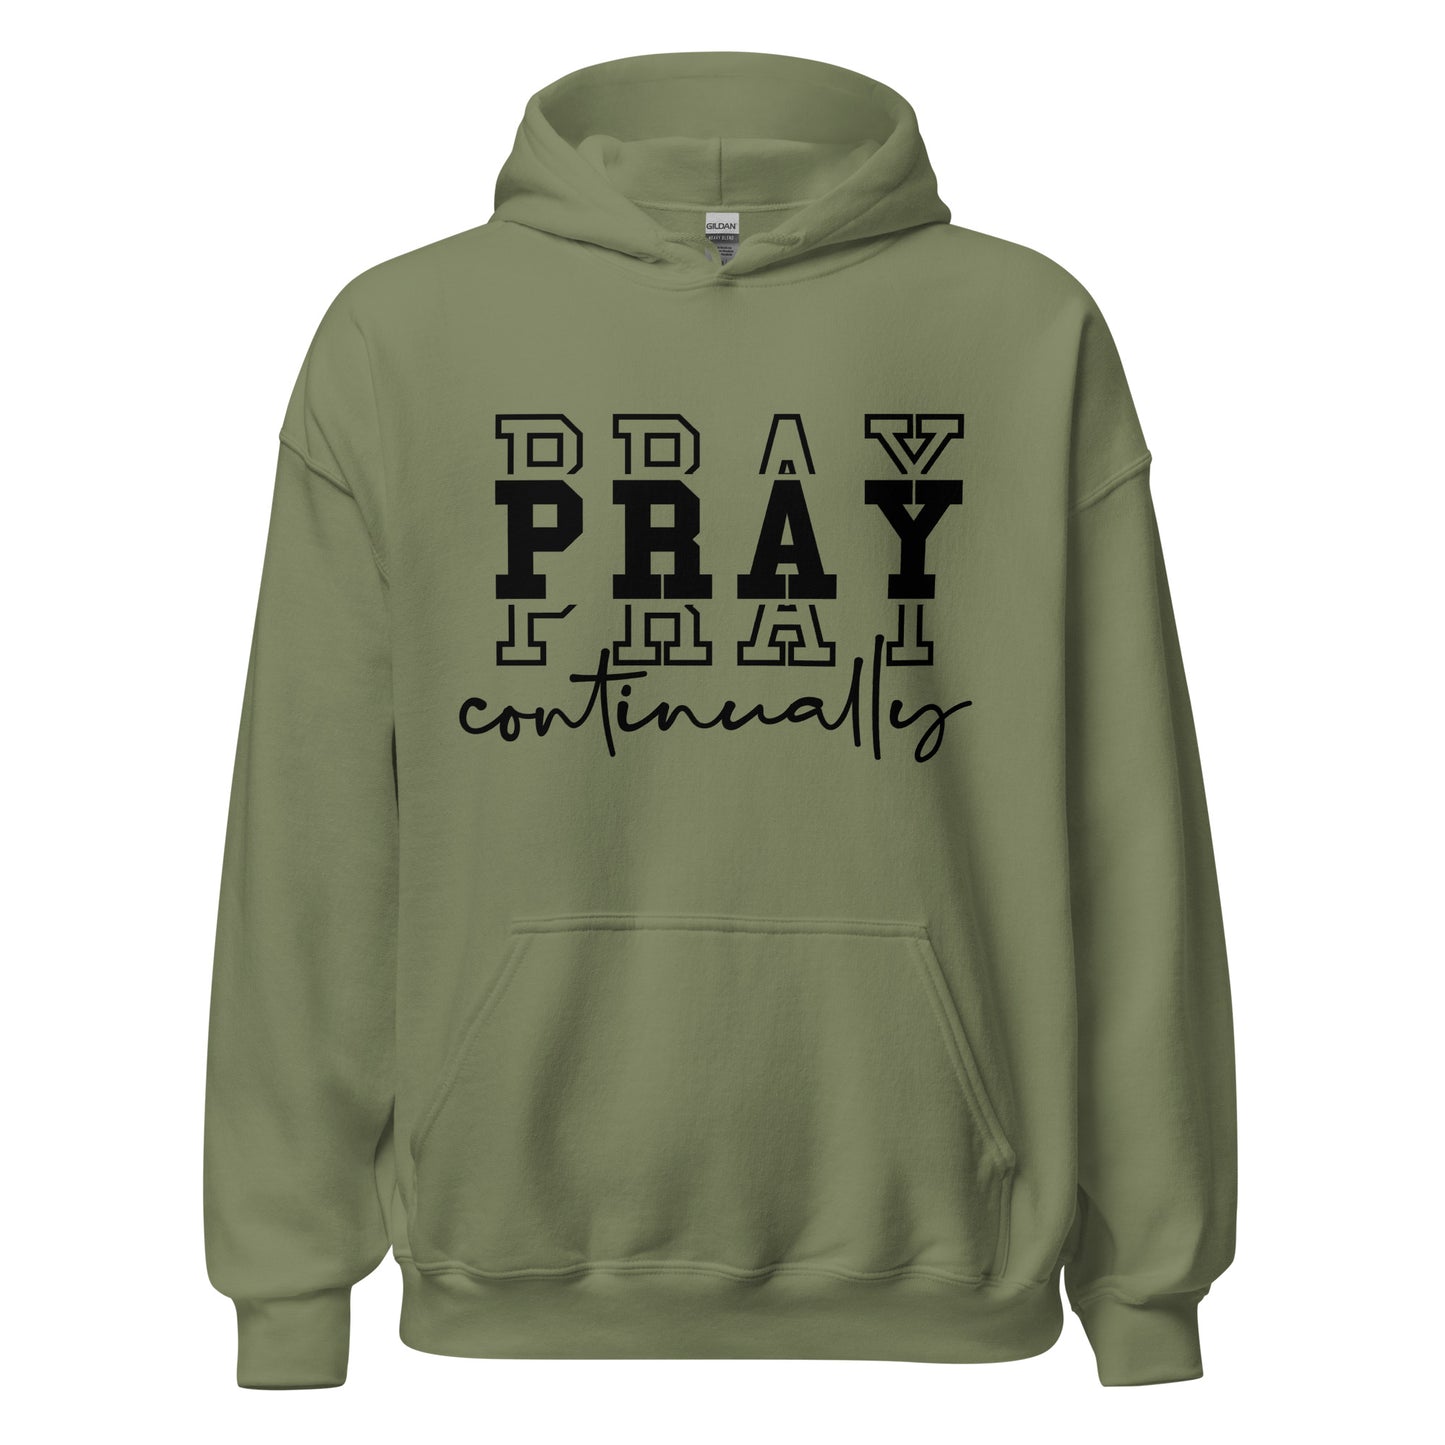 "Pray Continually" Unisex Hoodie.